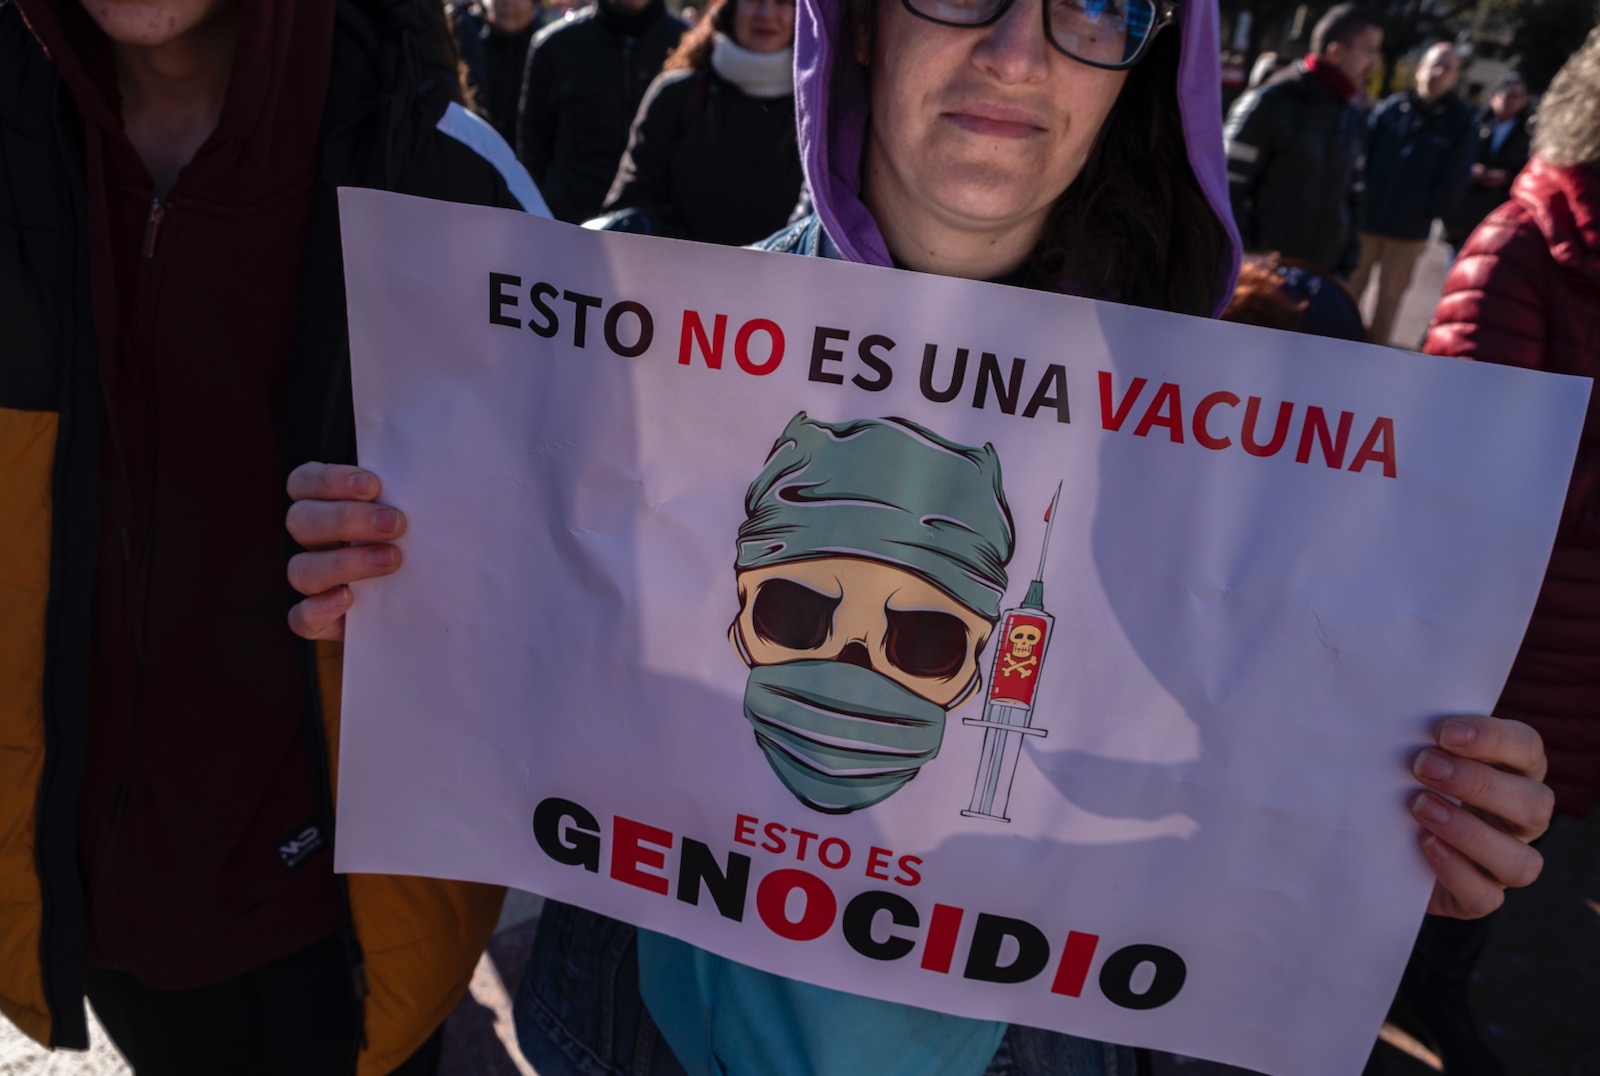 Antivaccine protest in Barcelona